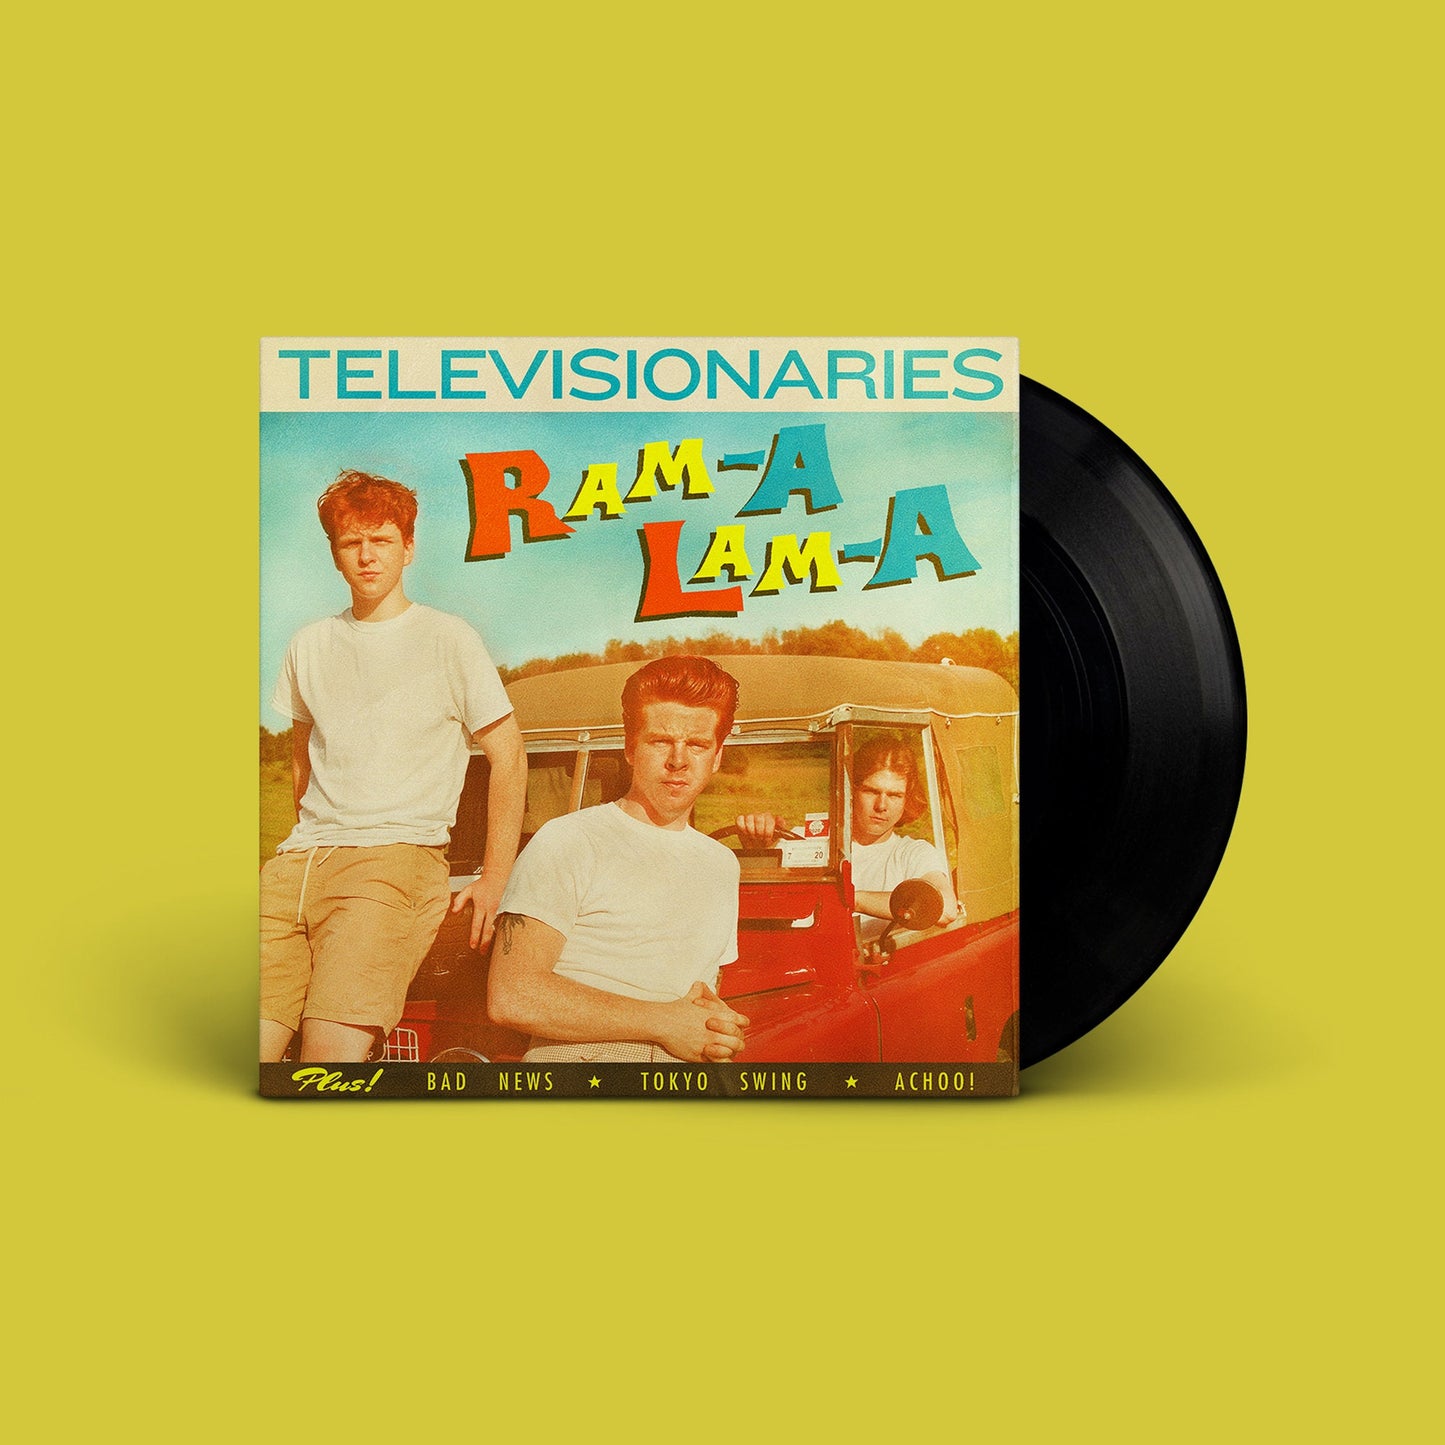 Televisionaries “Ram-A Lam-A” EP